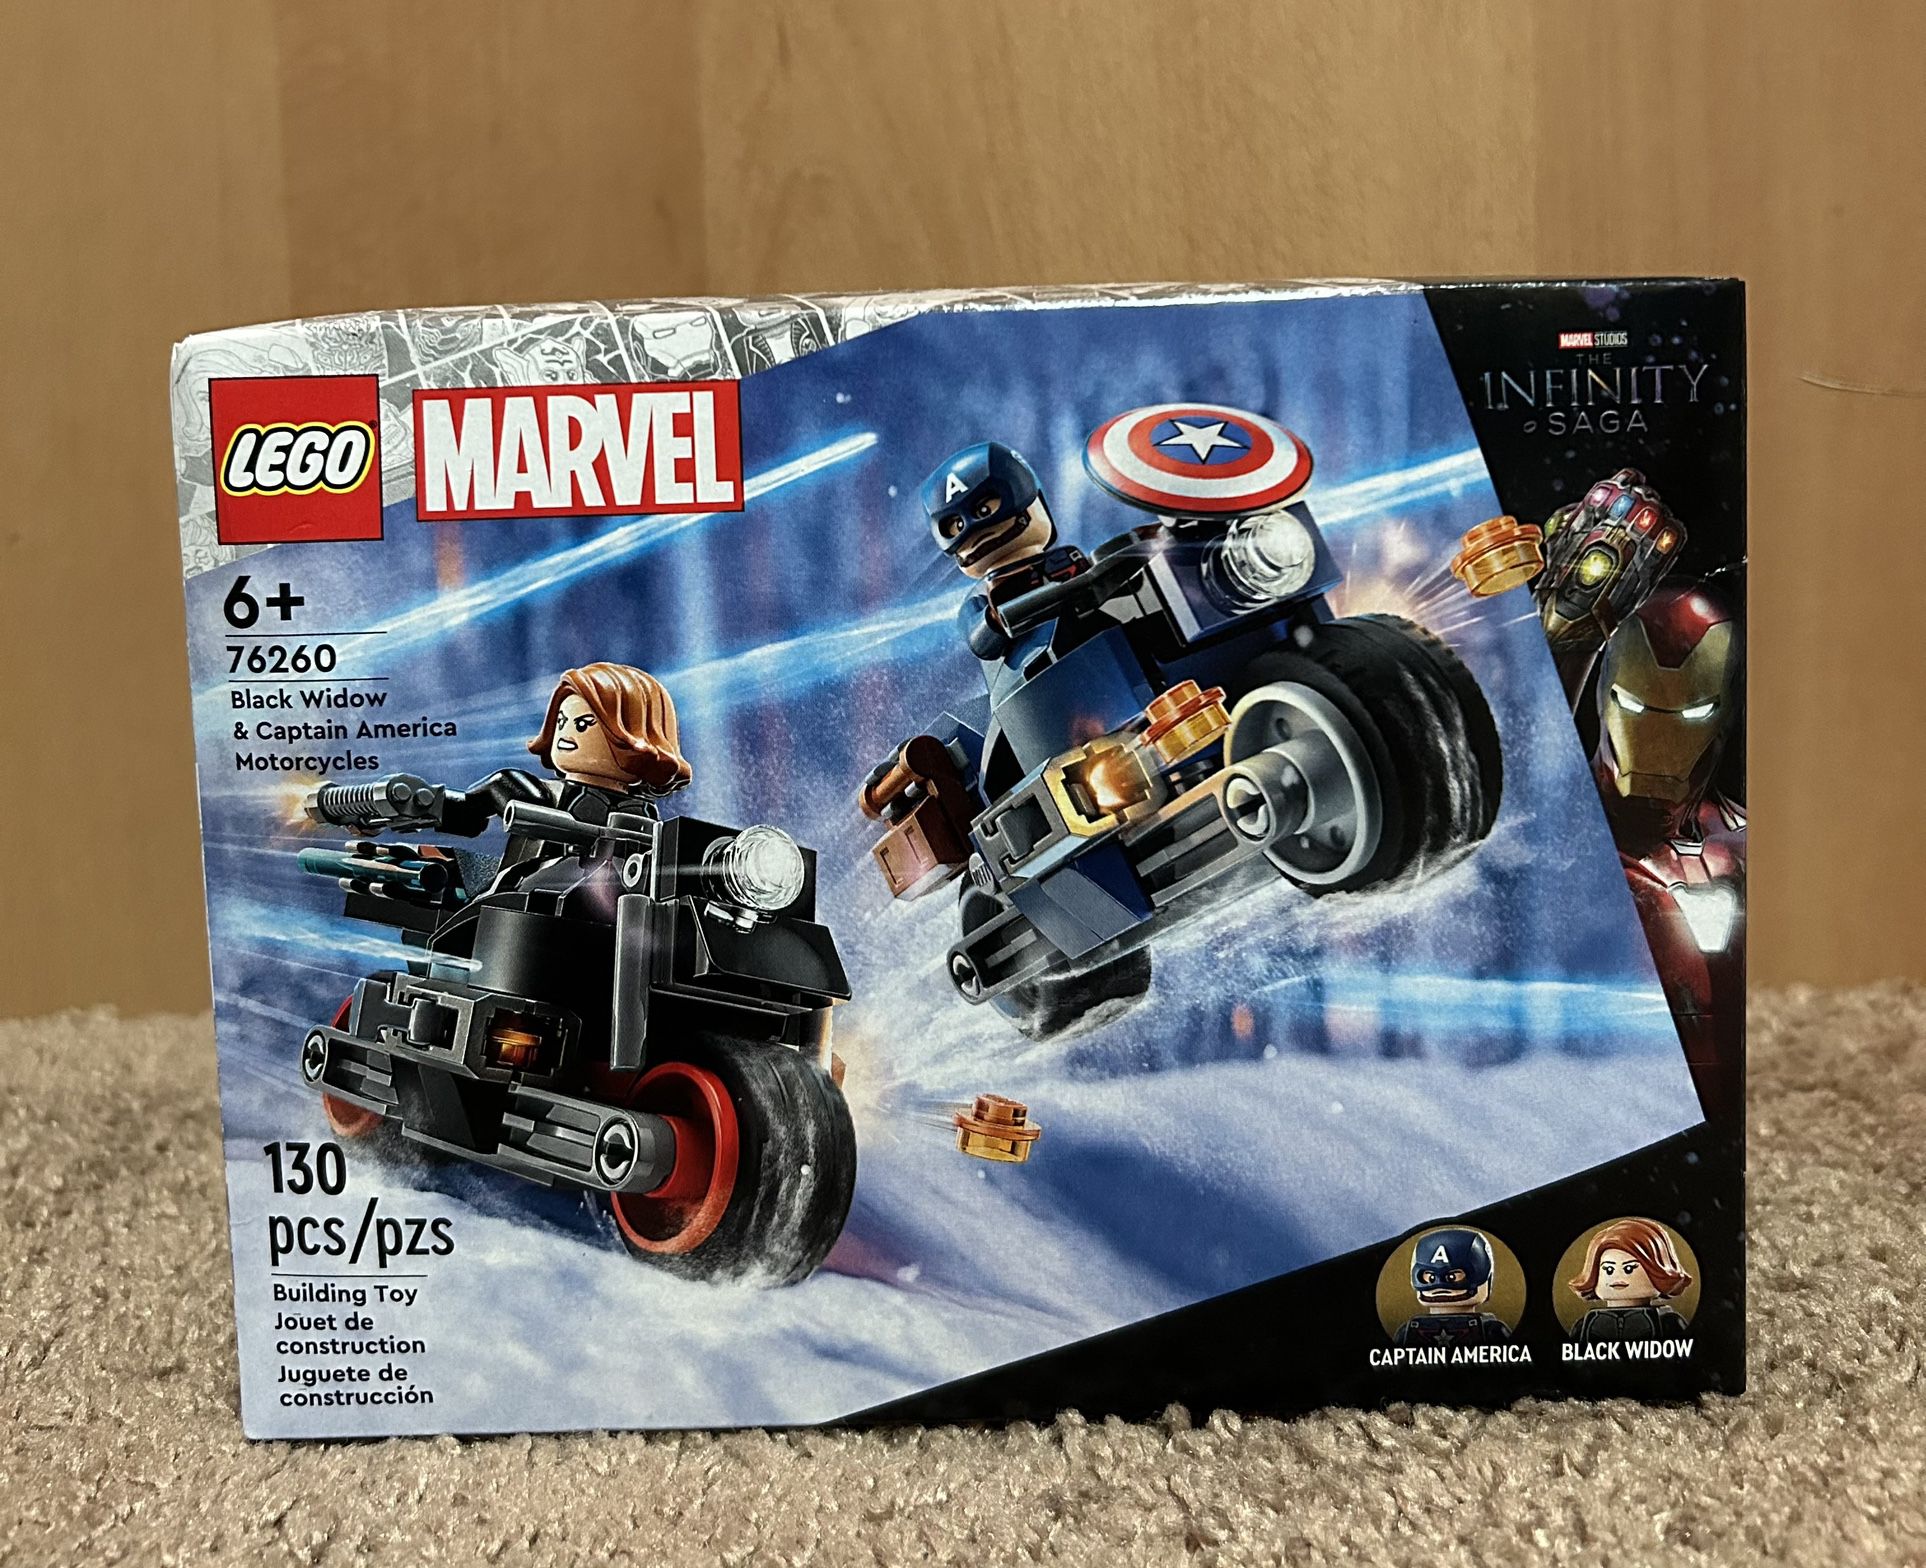 LEGO Marvel Black Widow & Captain America Motorcycles Set 76260